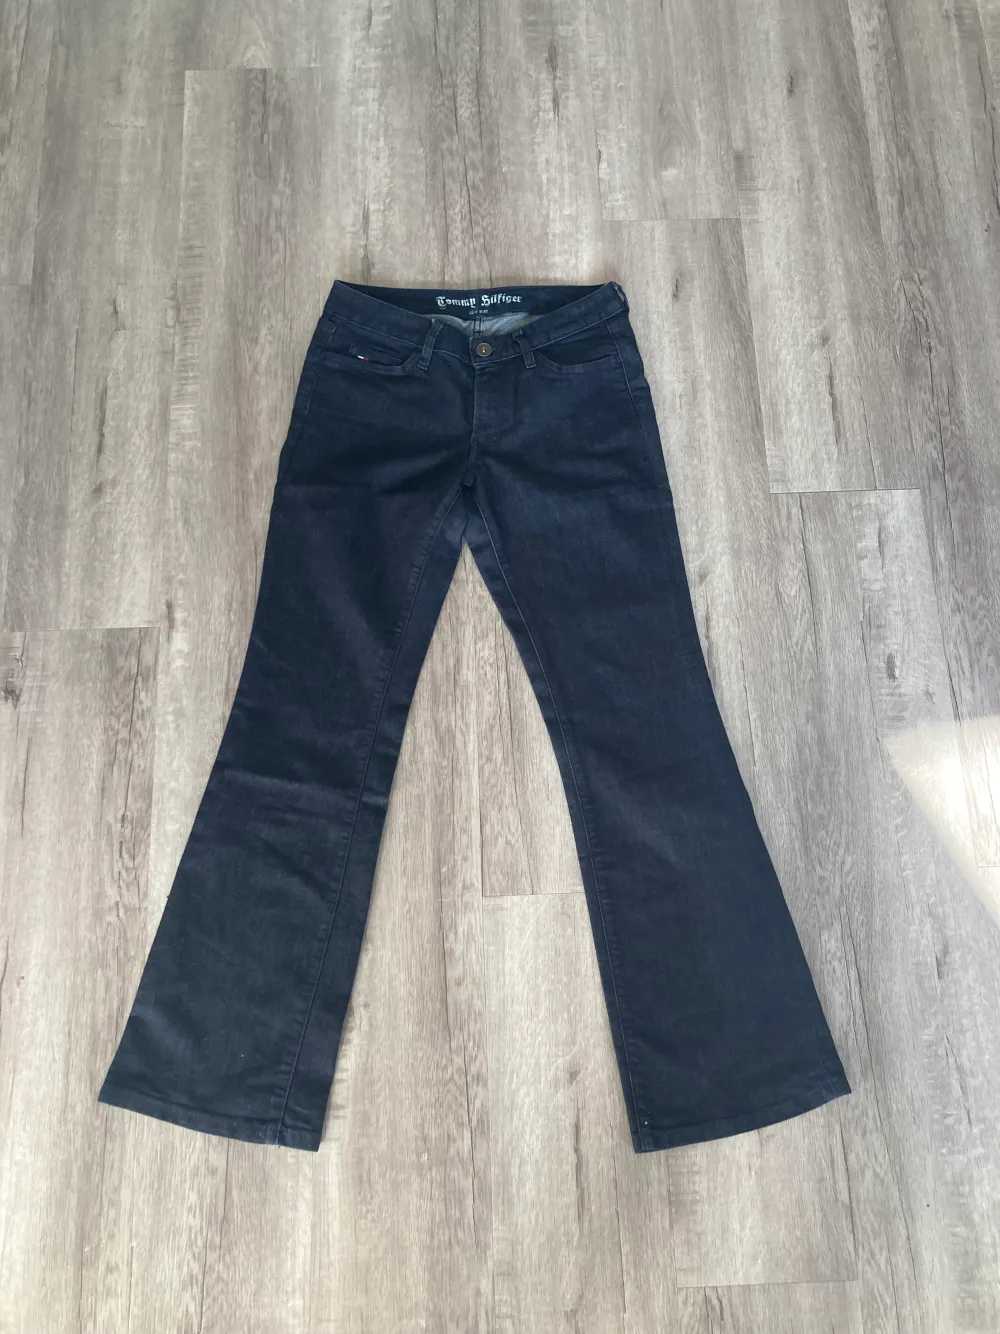 Mörkblå jeans från Tommy hilfiger. Midja 38 cm Höft 46. Jeans & Byxor.